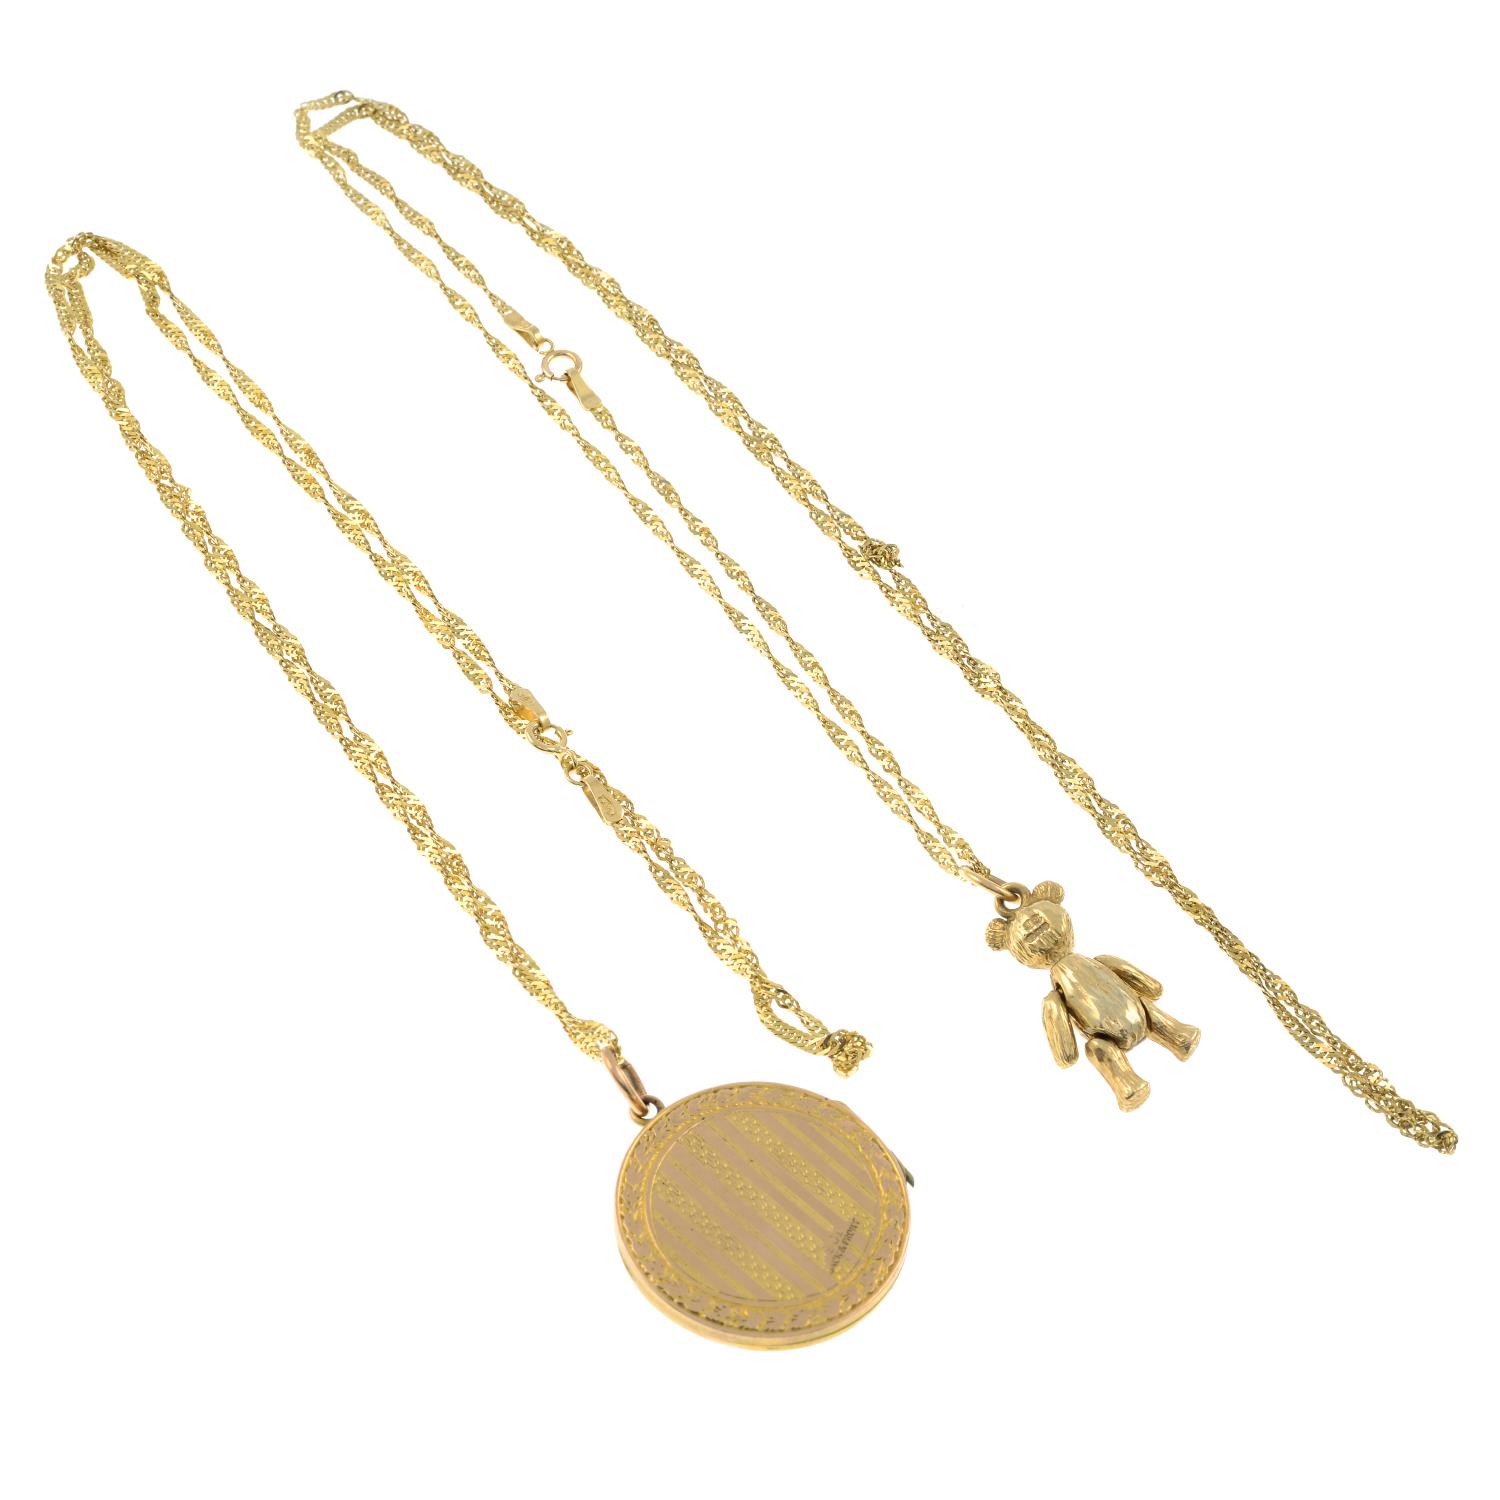 9ct gold teddy bear pendant, - Image 2 of 2